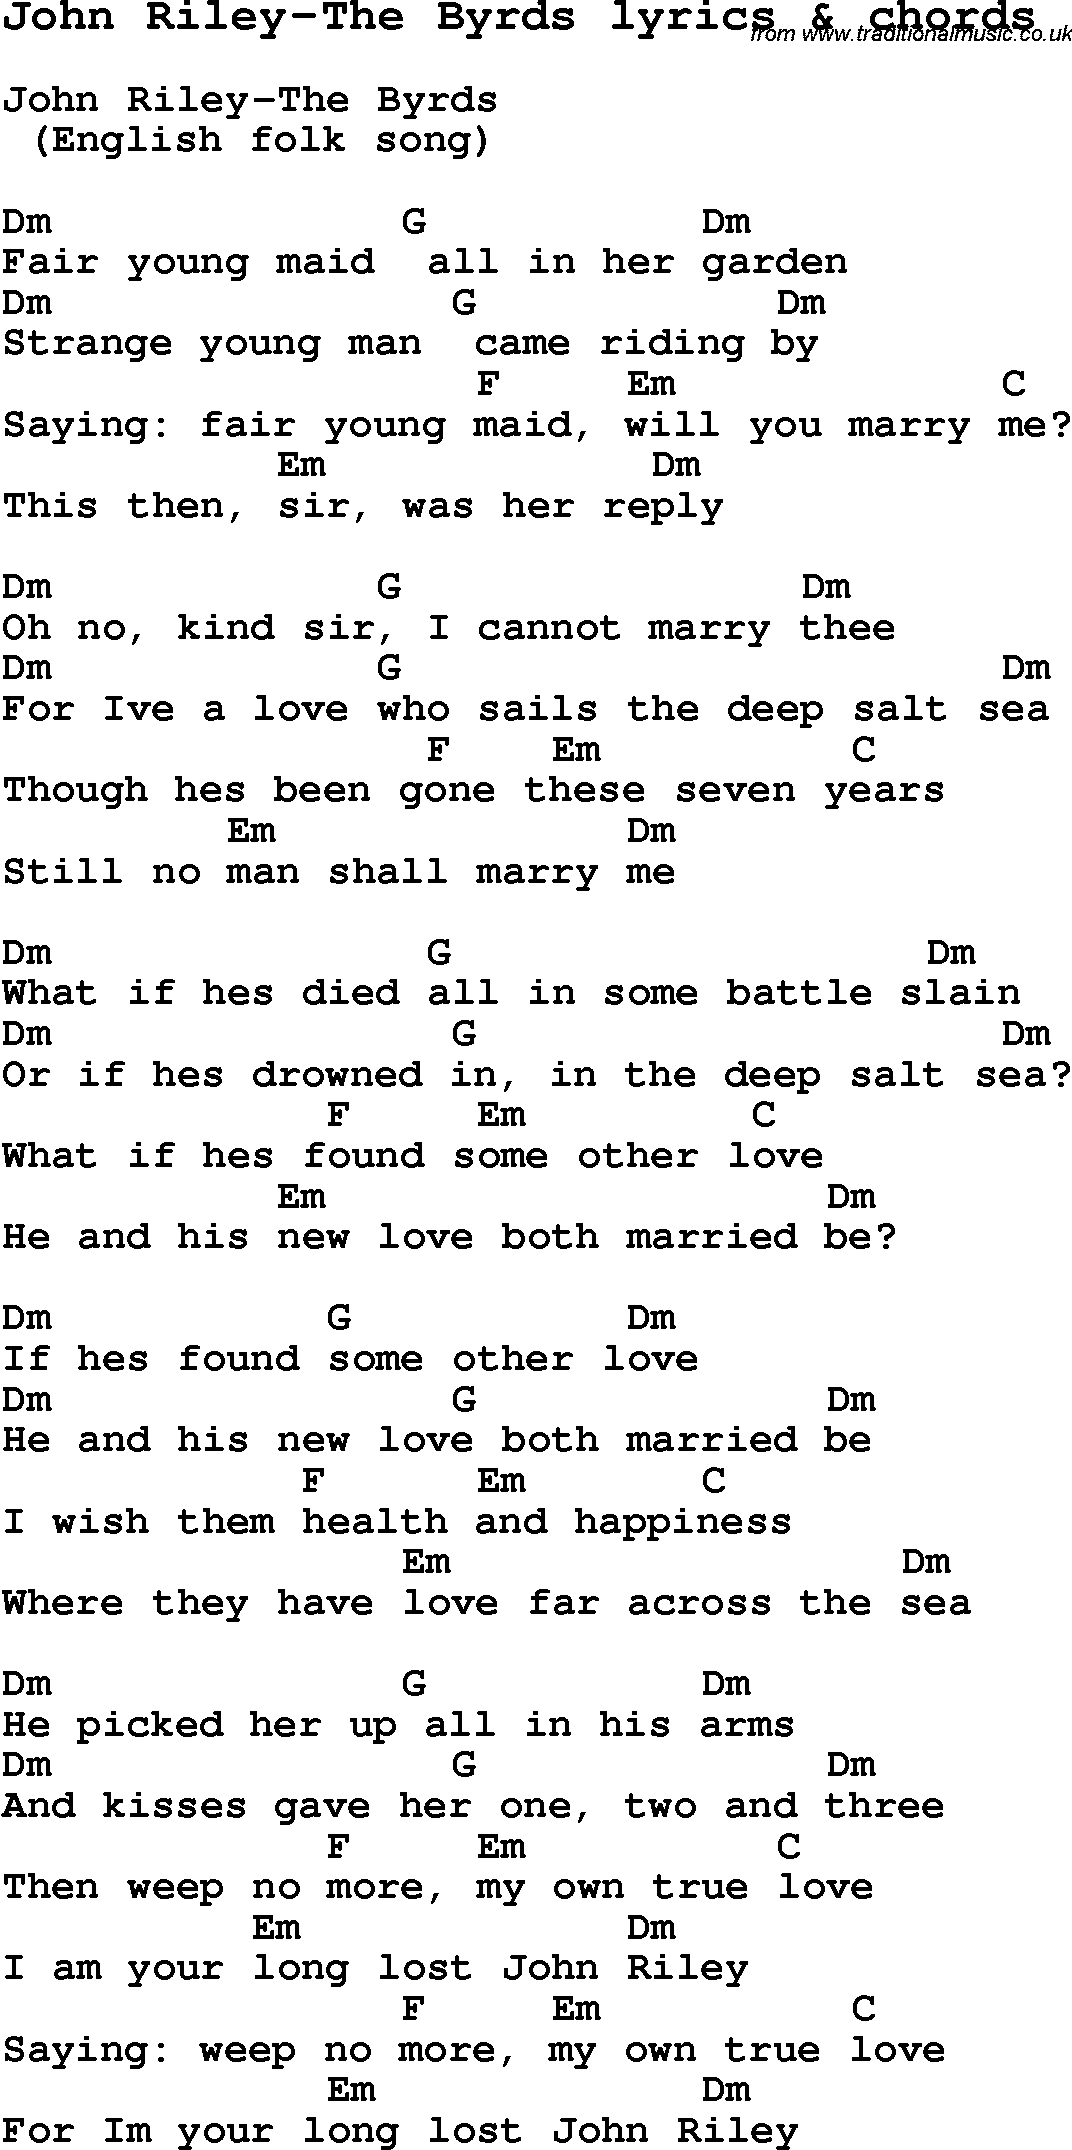 Love Song Lyrics for: John Riley-The Byrds with chords for Ukulele, Guitar Banjo etc.